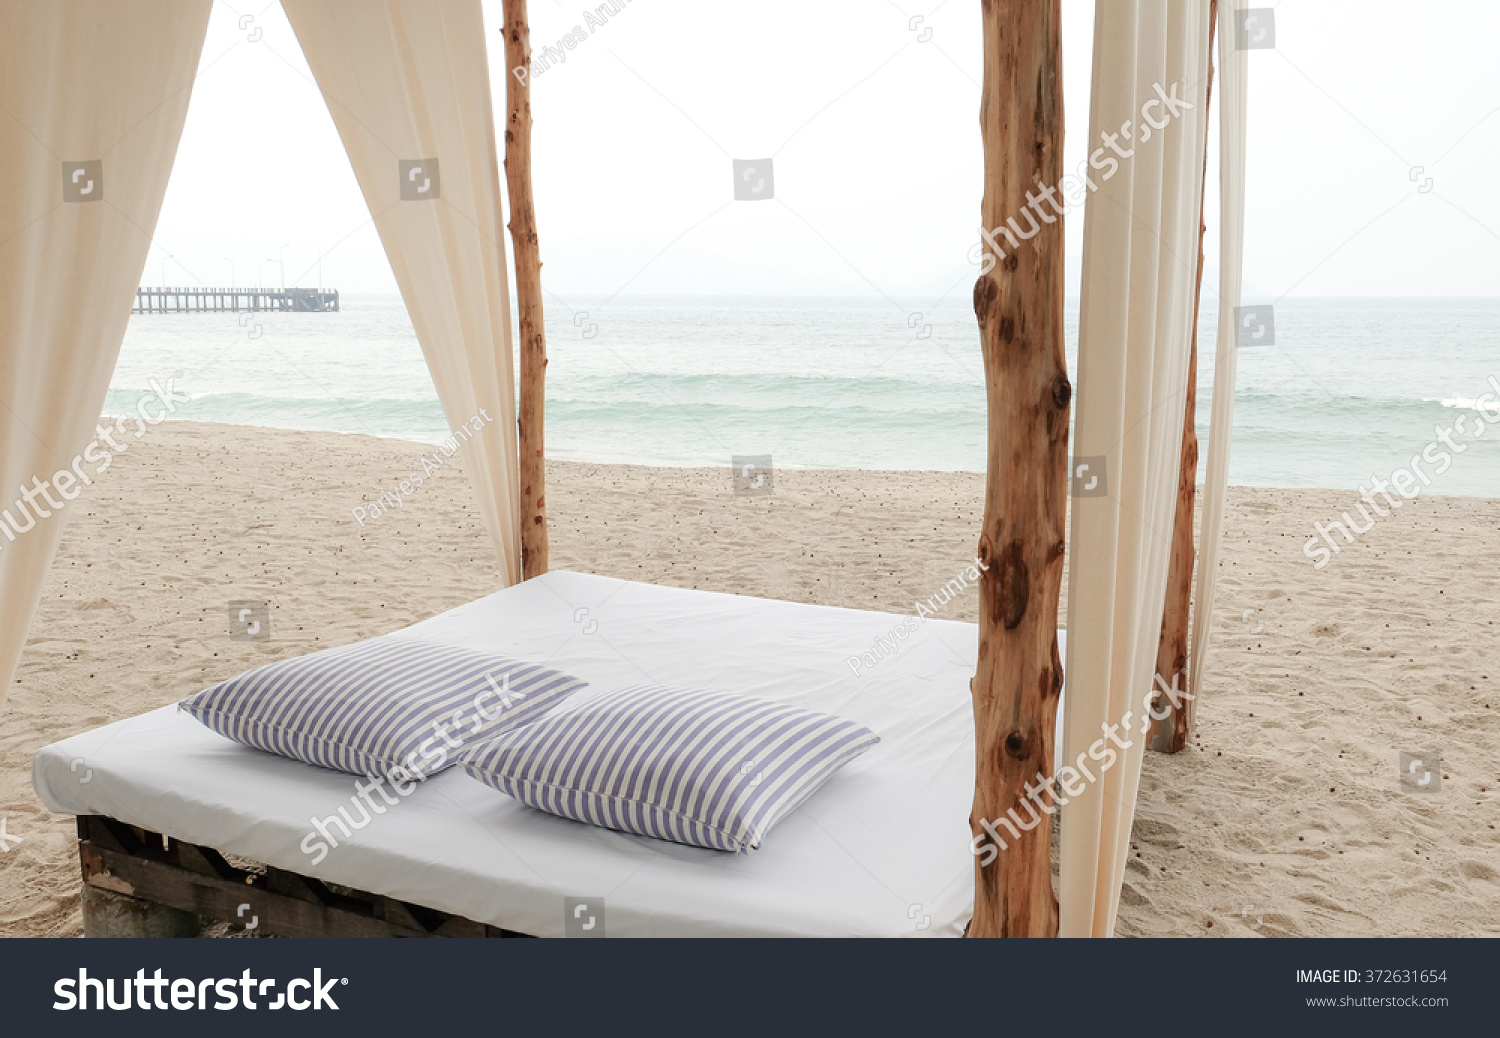 beach bed pillows